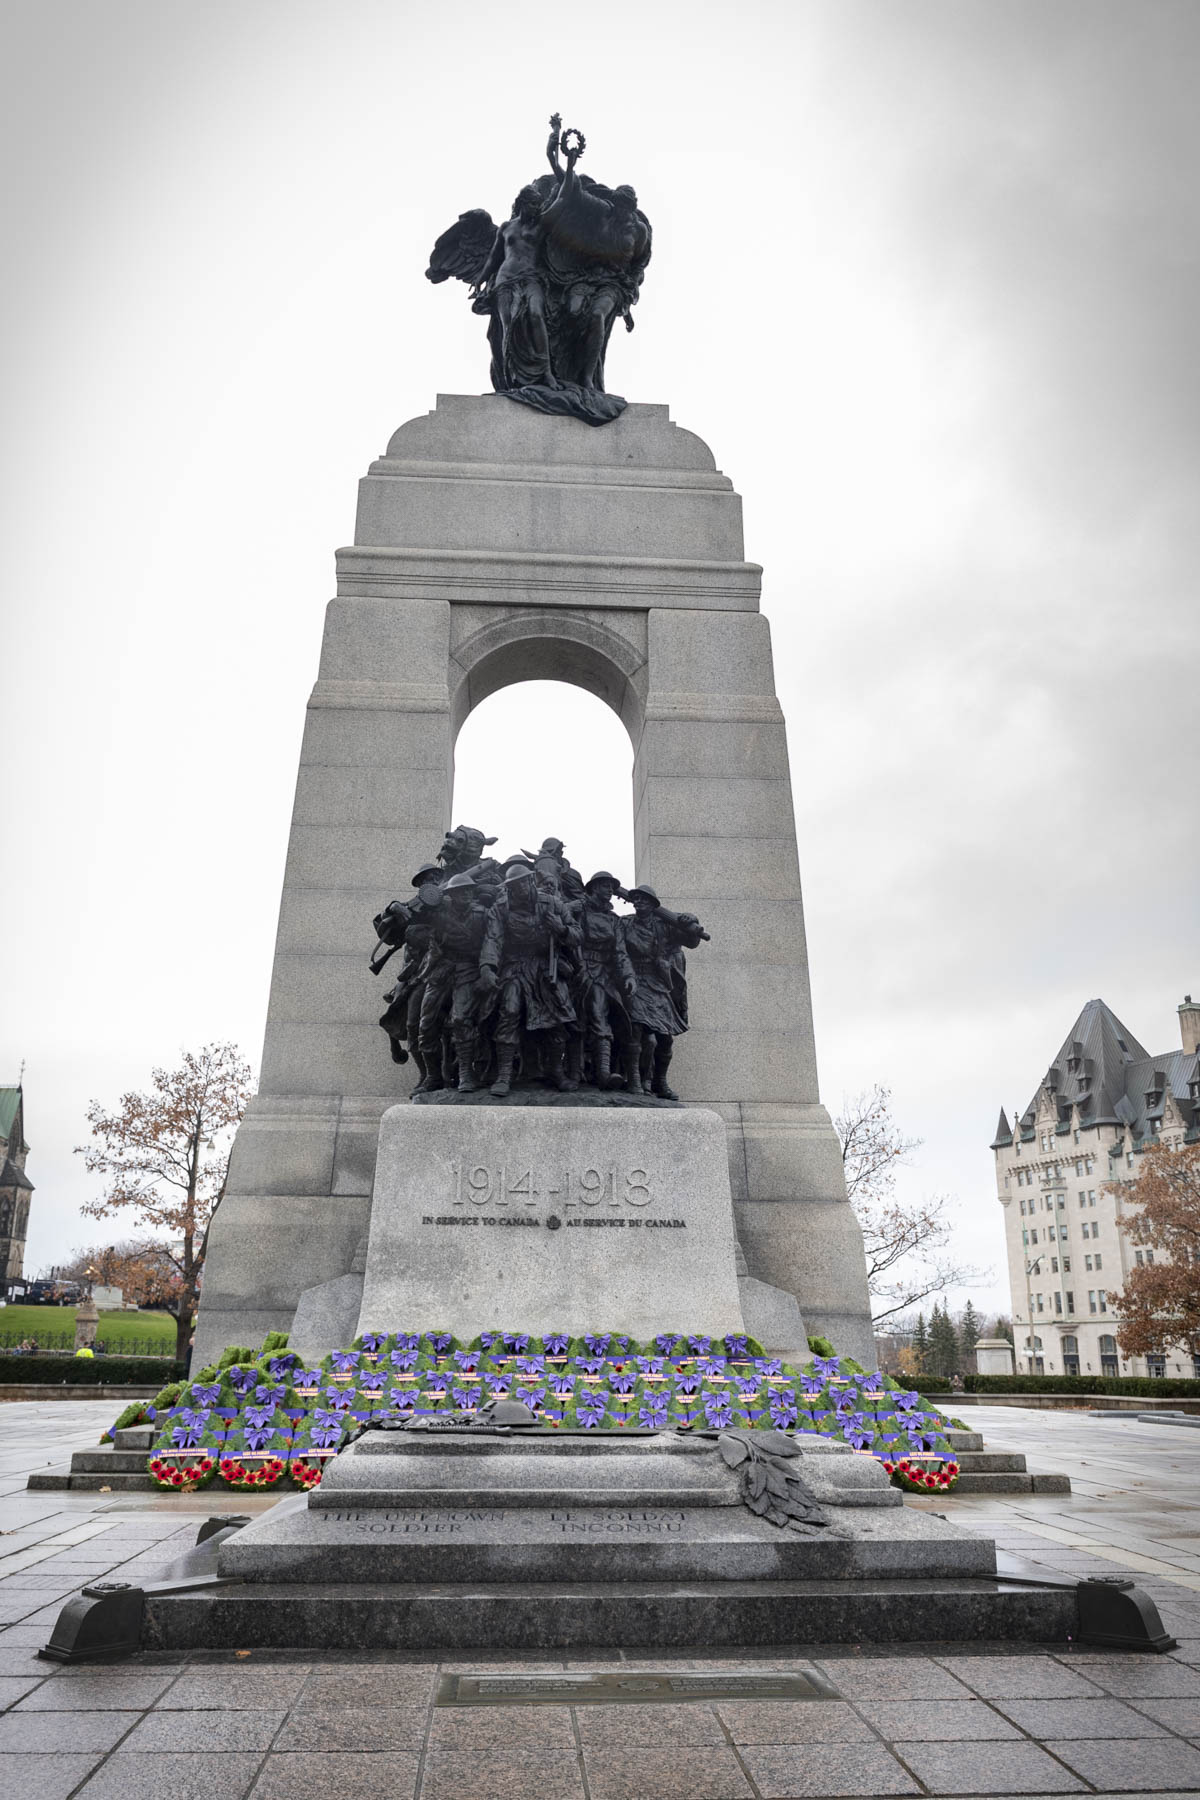 To commemorate Remembrance Day and - Canadiens de Montréal